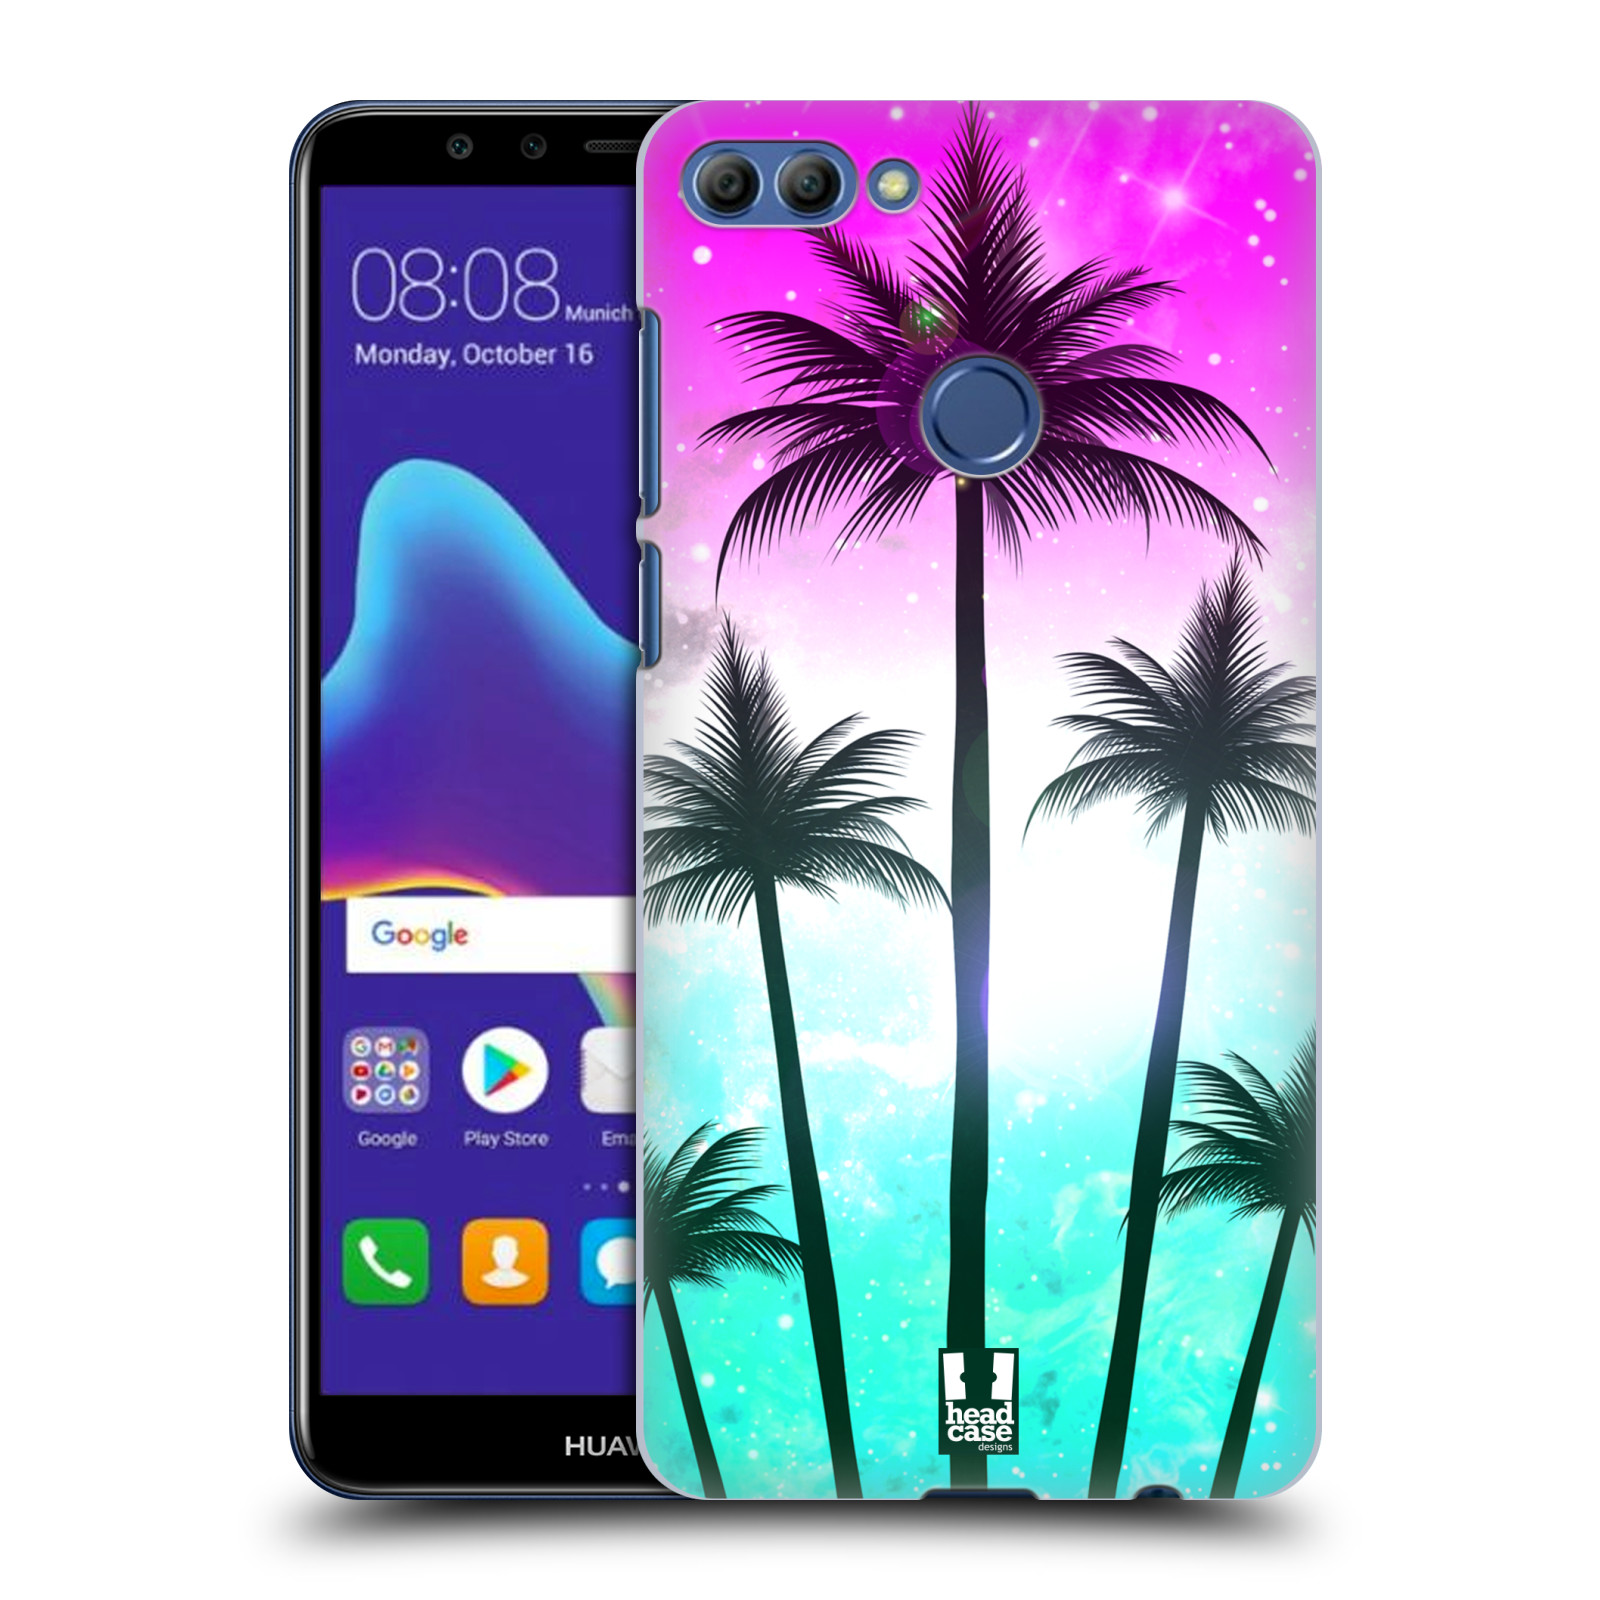 HEAD CASE plastový obal na mobil Huawei Y9 2018 vzor Kreslený motiv silueta moře a palmy RŮŽOVÁ A TYRKYS